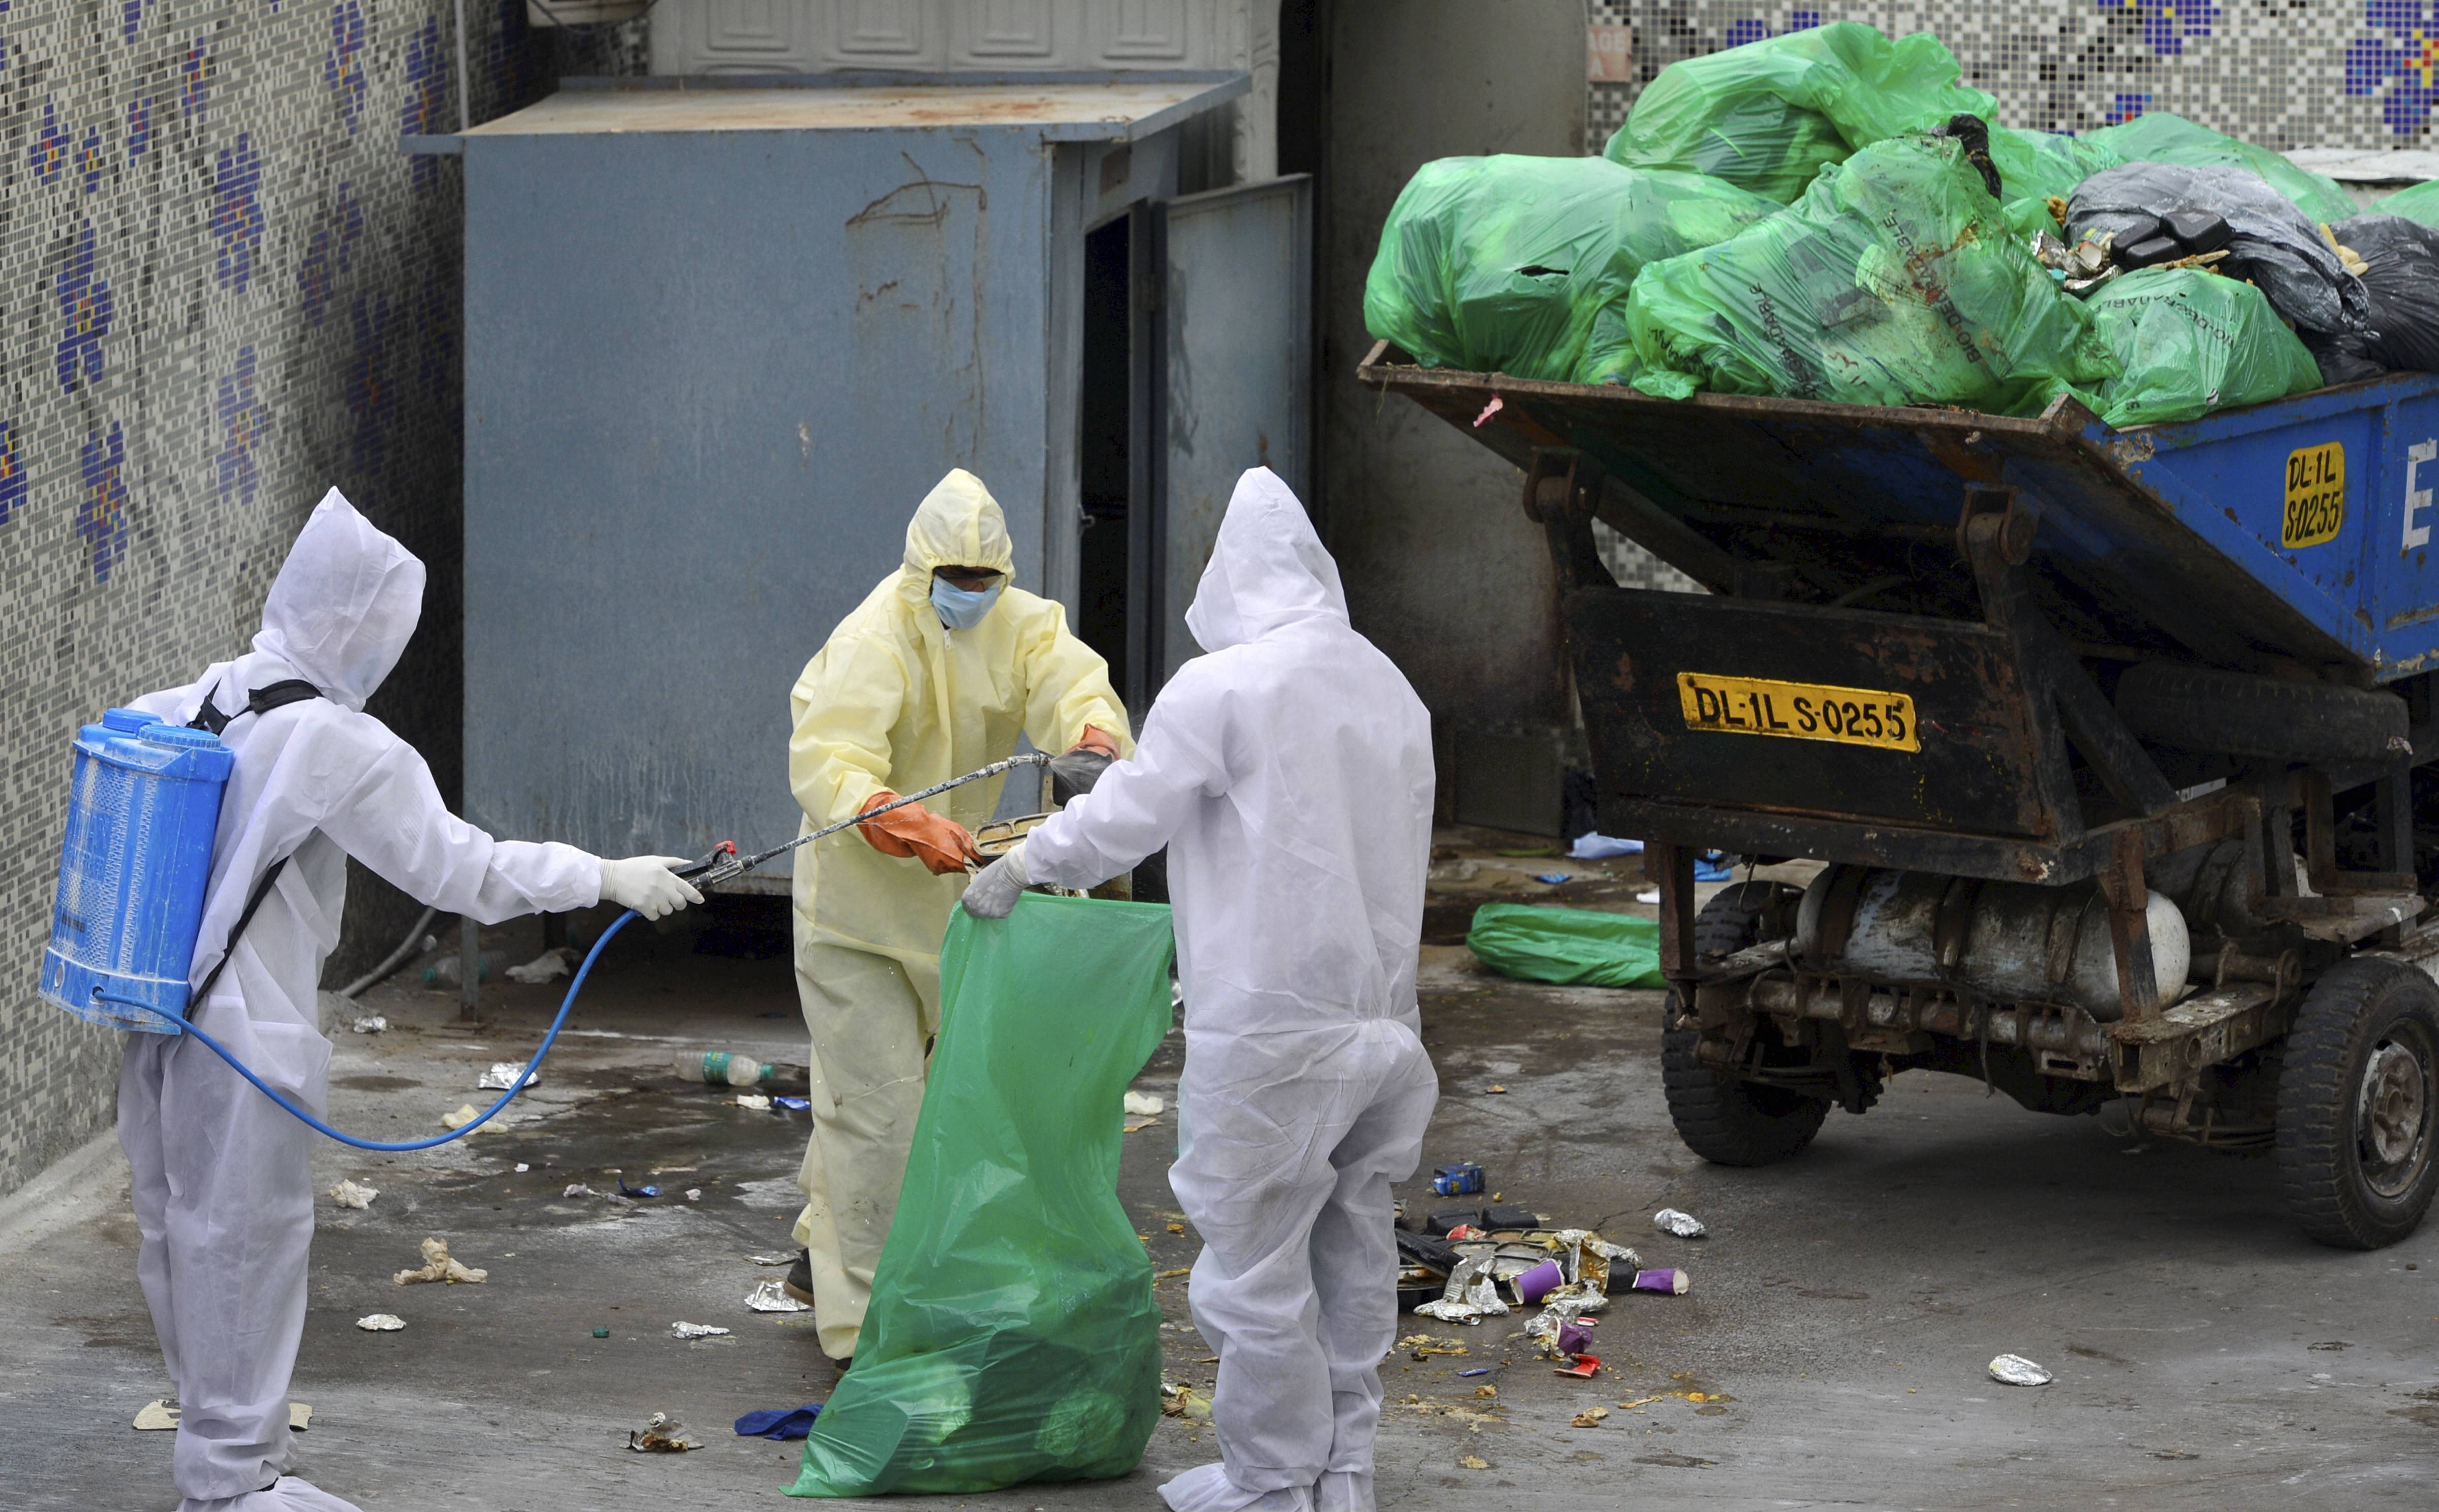 Researchers find ‘dangerous’ drug-resistant bacterial gene in hospital waste